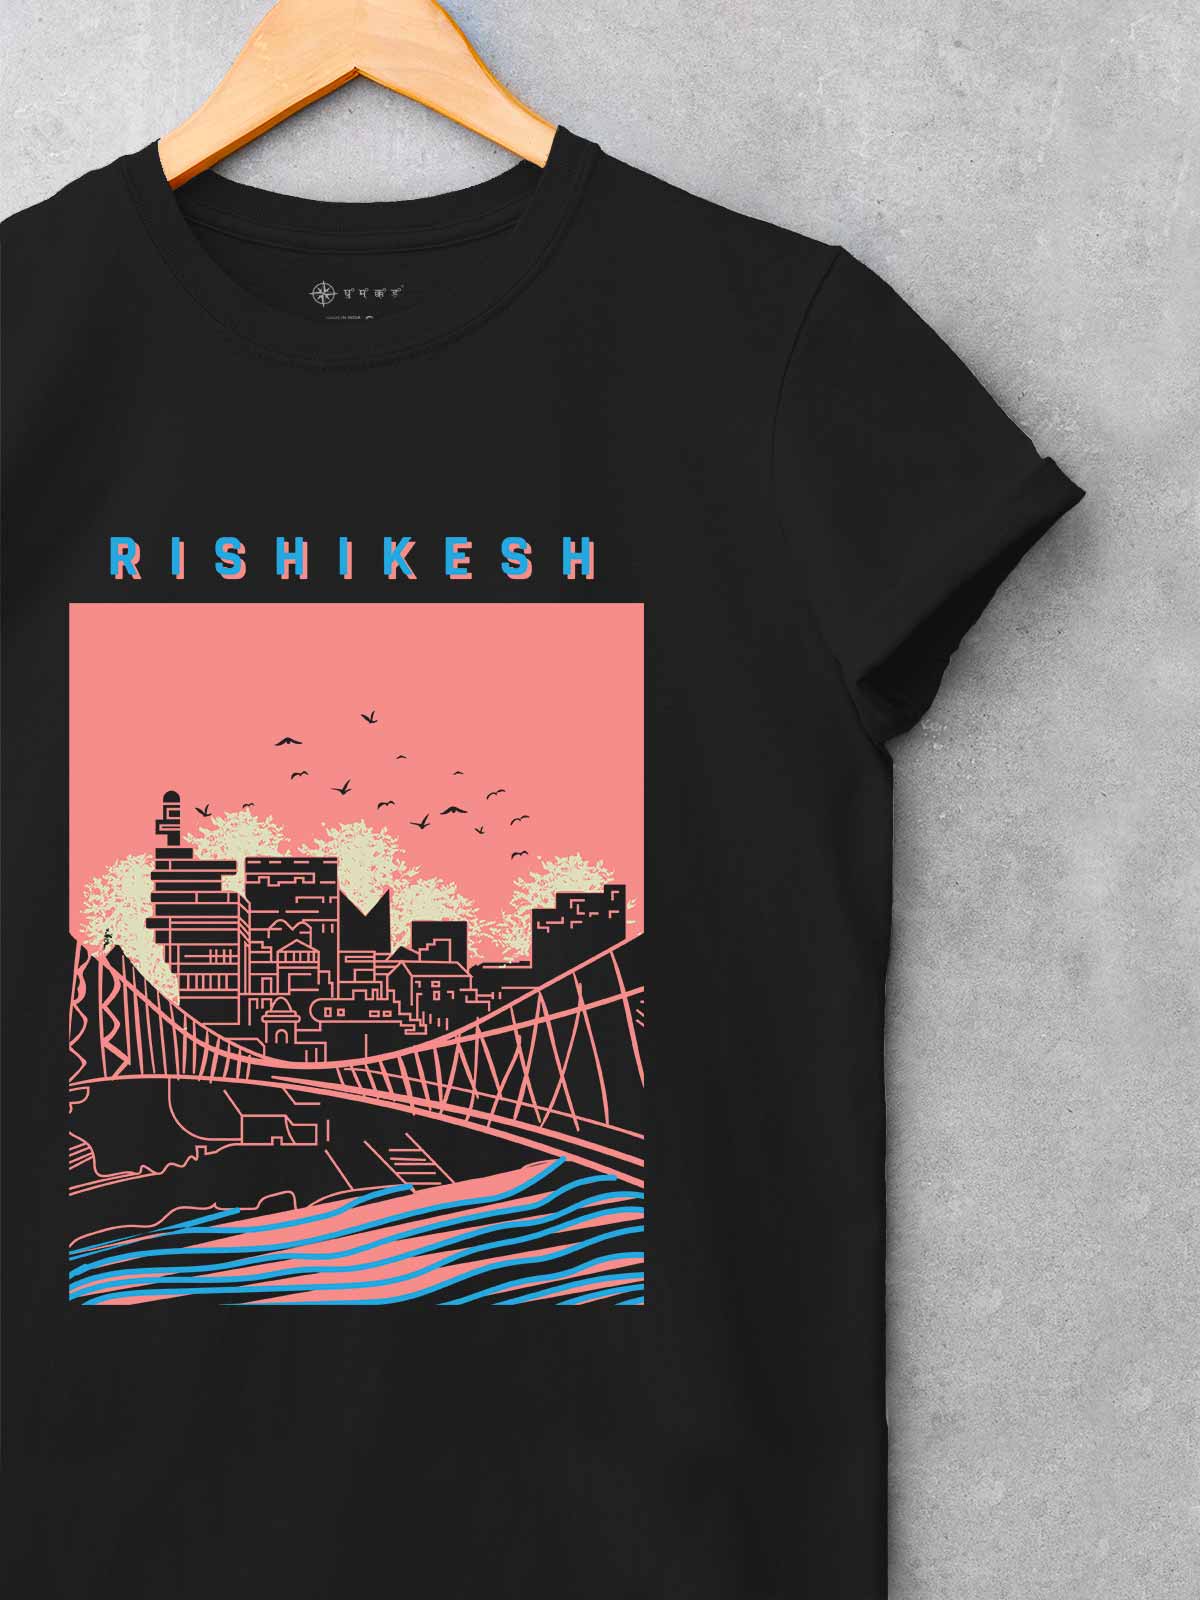 Rishikesh-printed-t-shirt-for-men by Ghumakkad